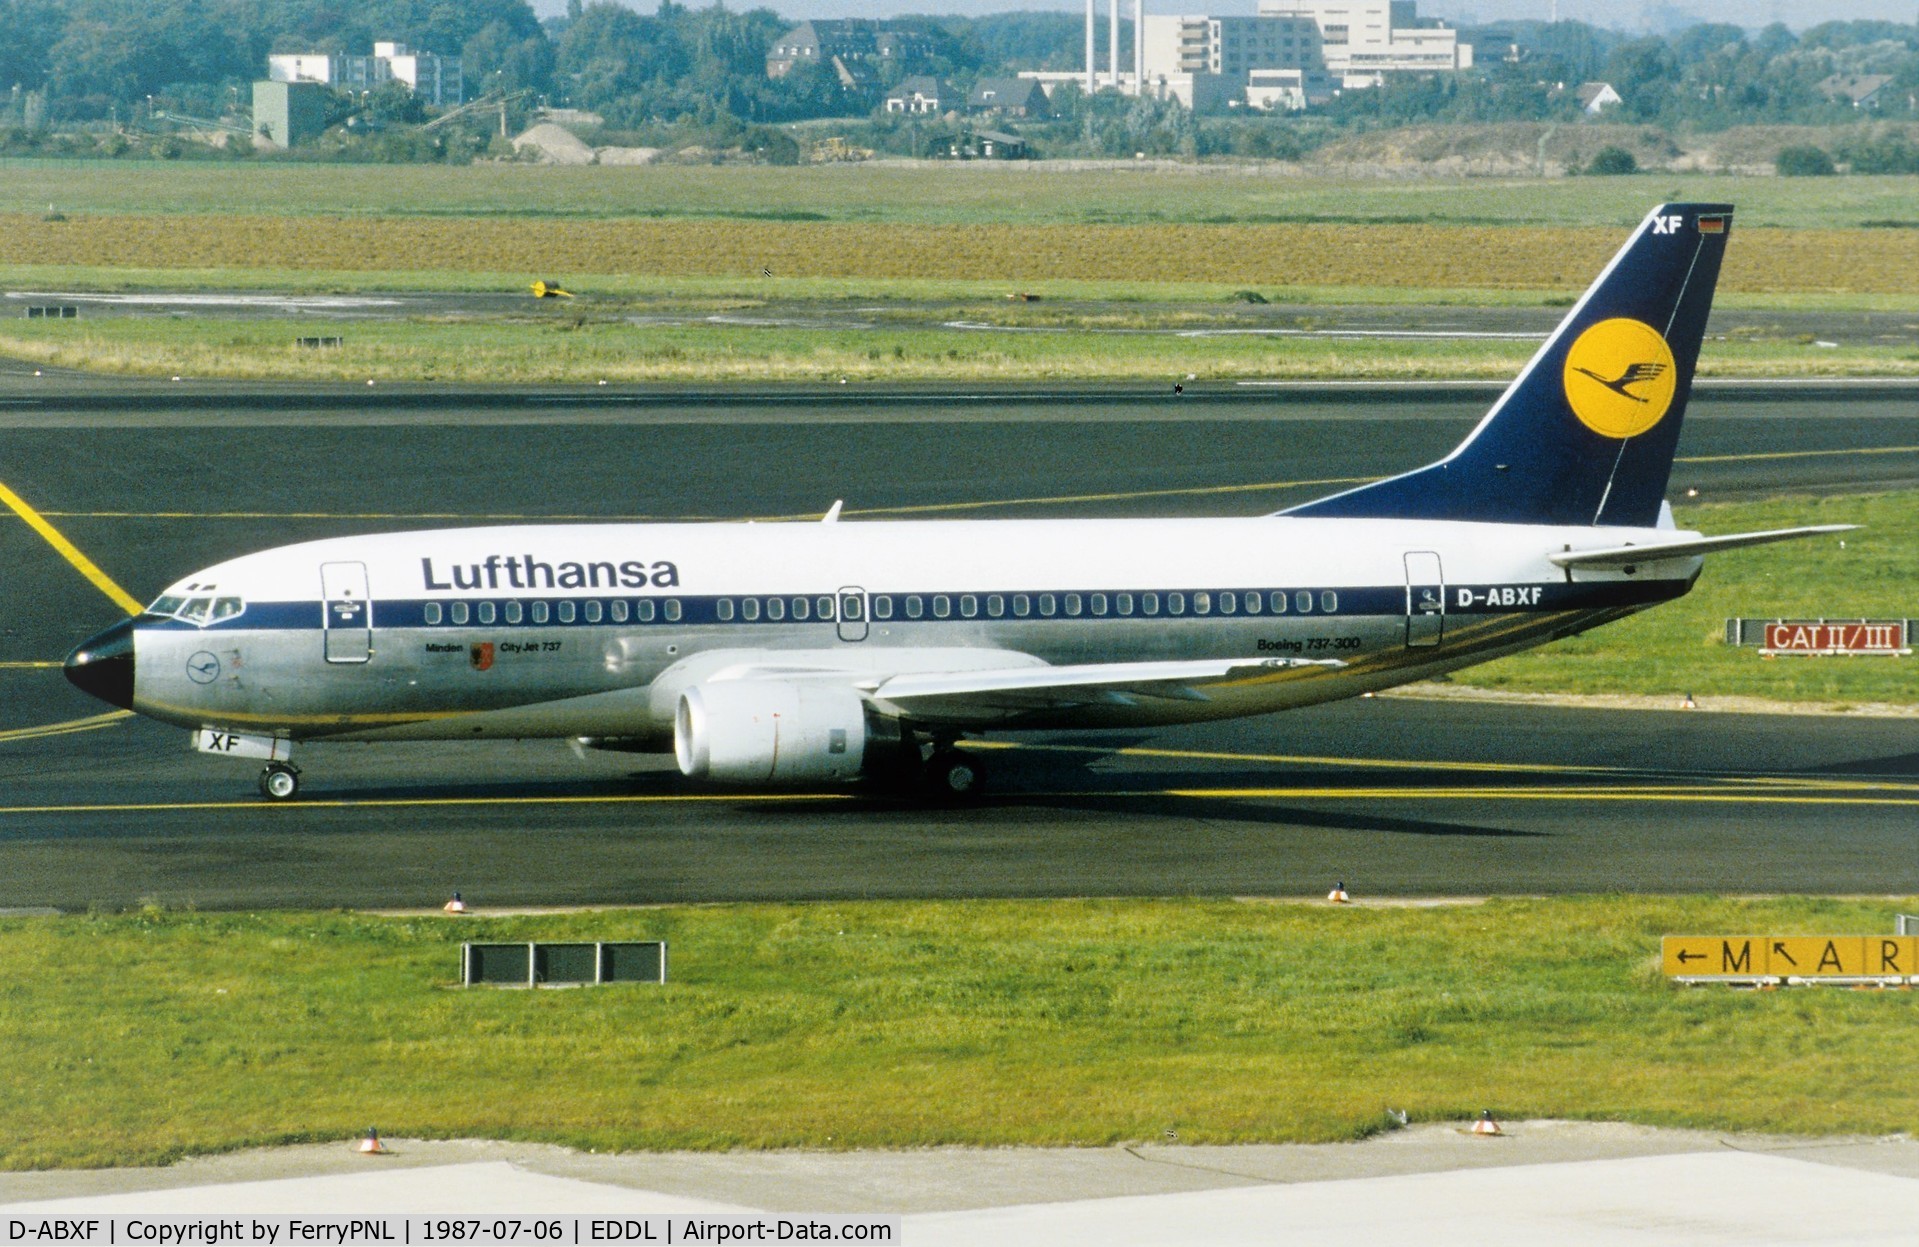 D-ABXF, 1986 Boeing 737-330 C/N 23527, Lufthansa B733 taxiing